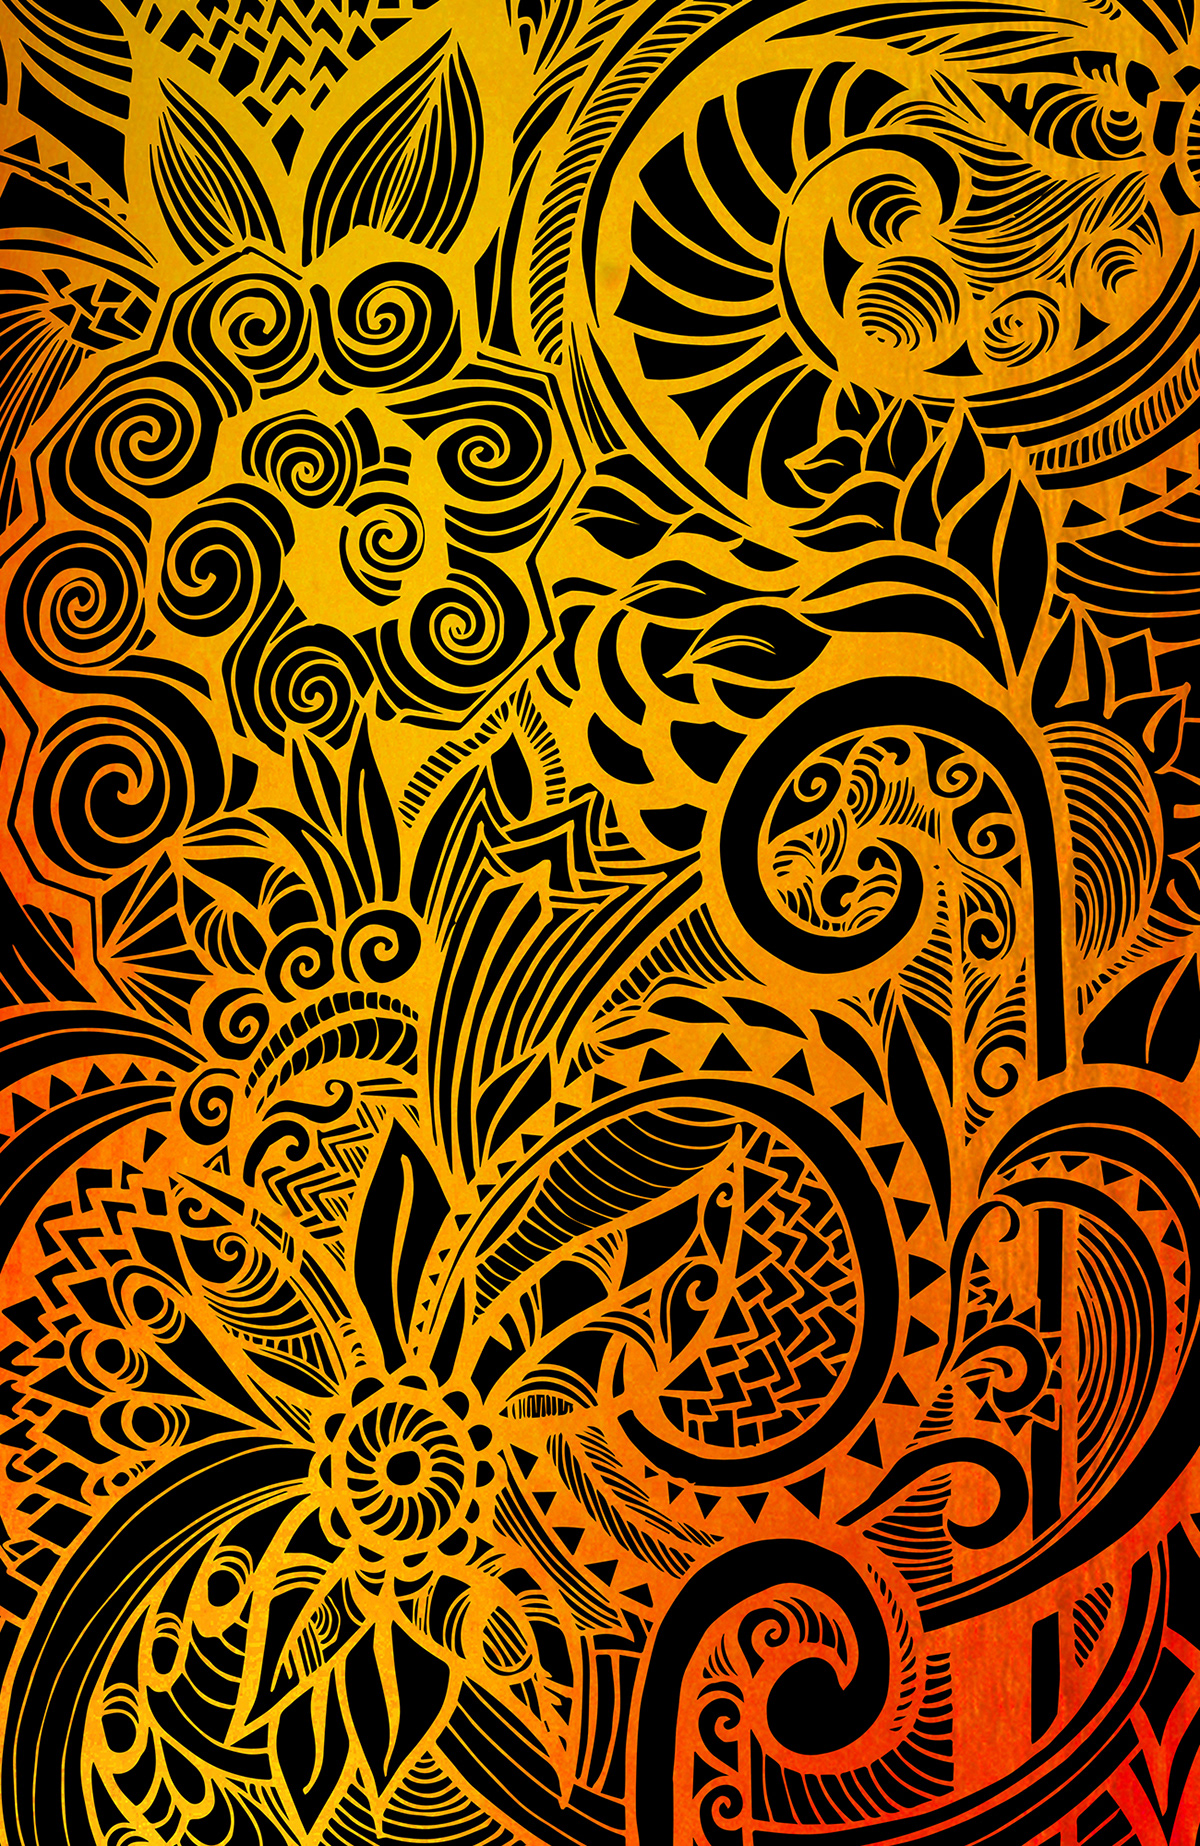 iphone case iphonecase handdrawing sharpie flower pattern Abstract Art colorful art illustration art Las Vegas iowa